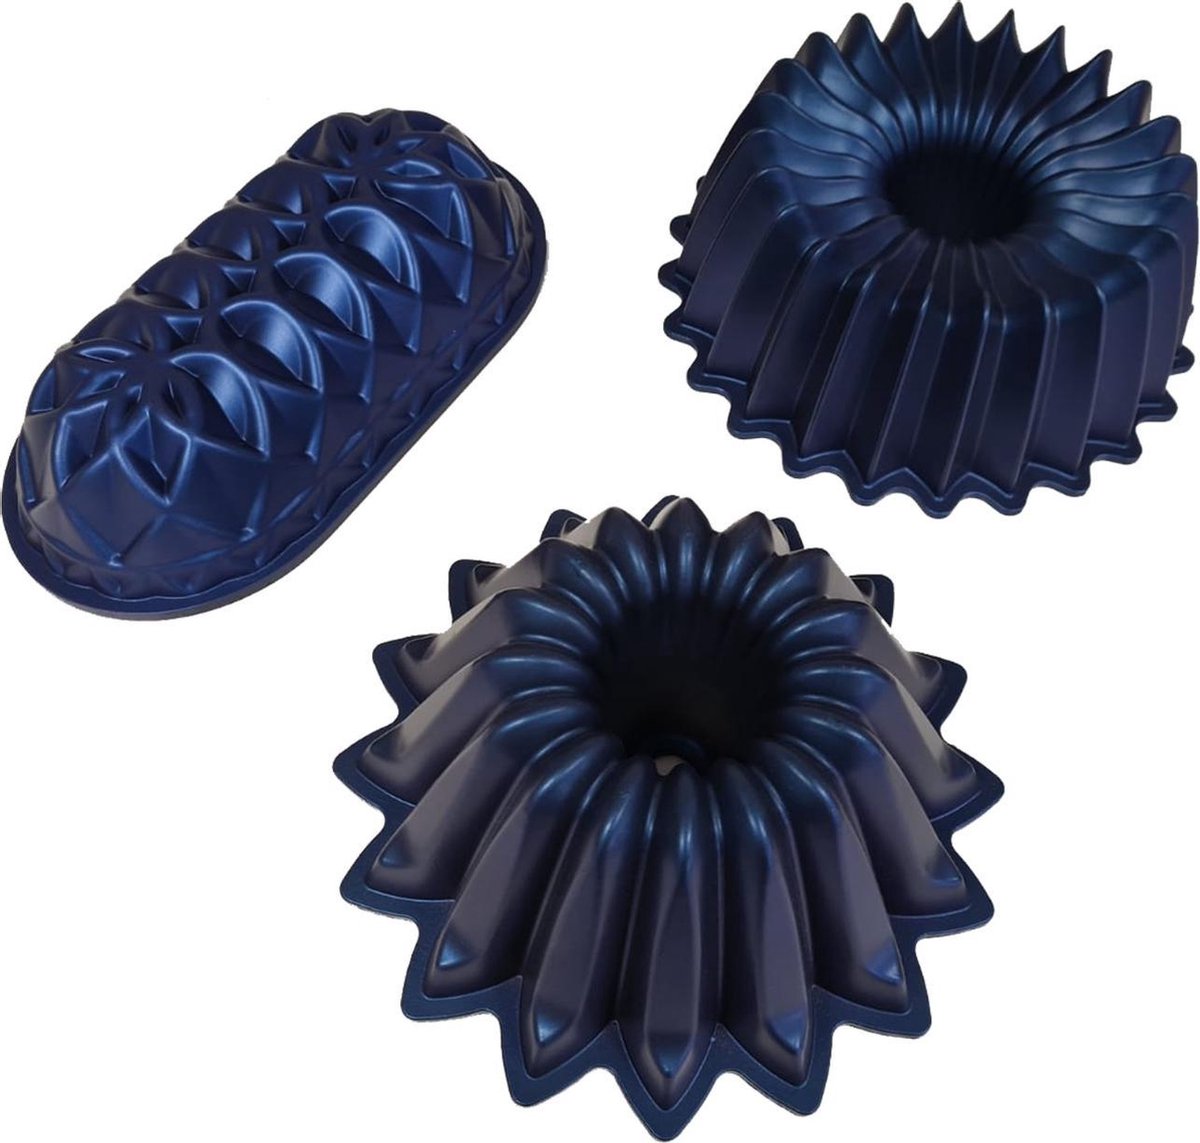 GTRENDS - Driedelige Titanium Bakvormen Set- Blauw-Baton vorm - Ster vorm- Milano vorm-Cakevorm-Gebak vorm-